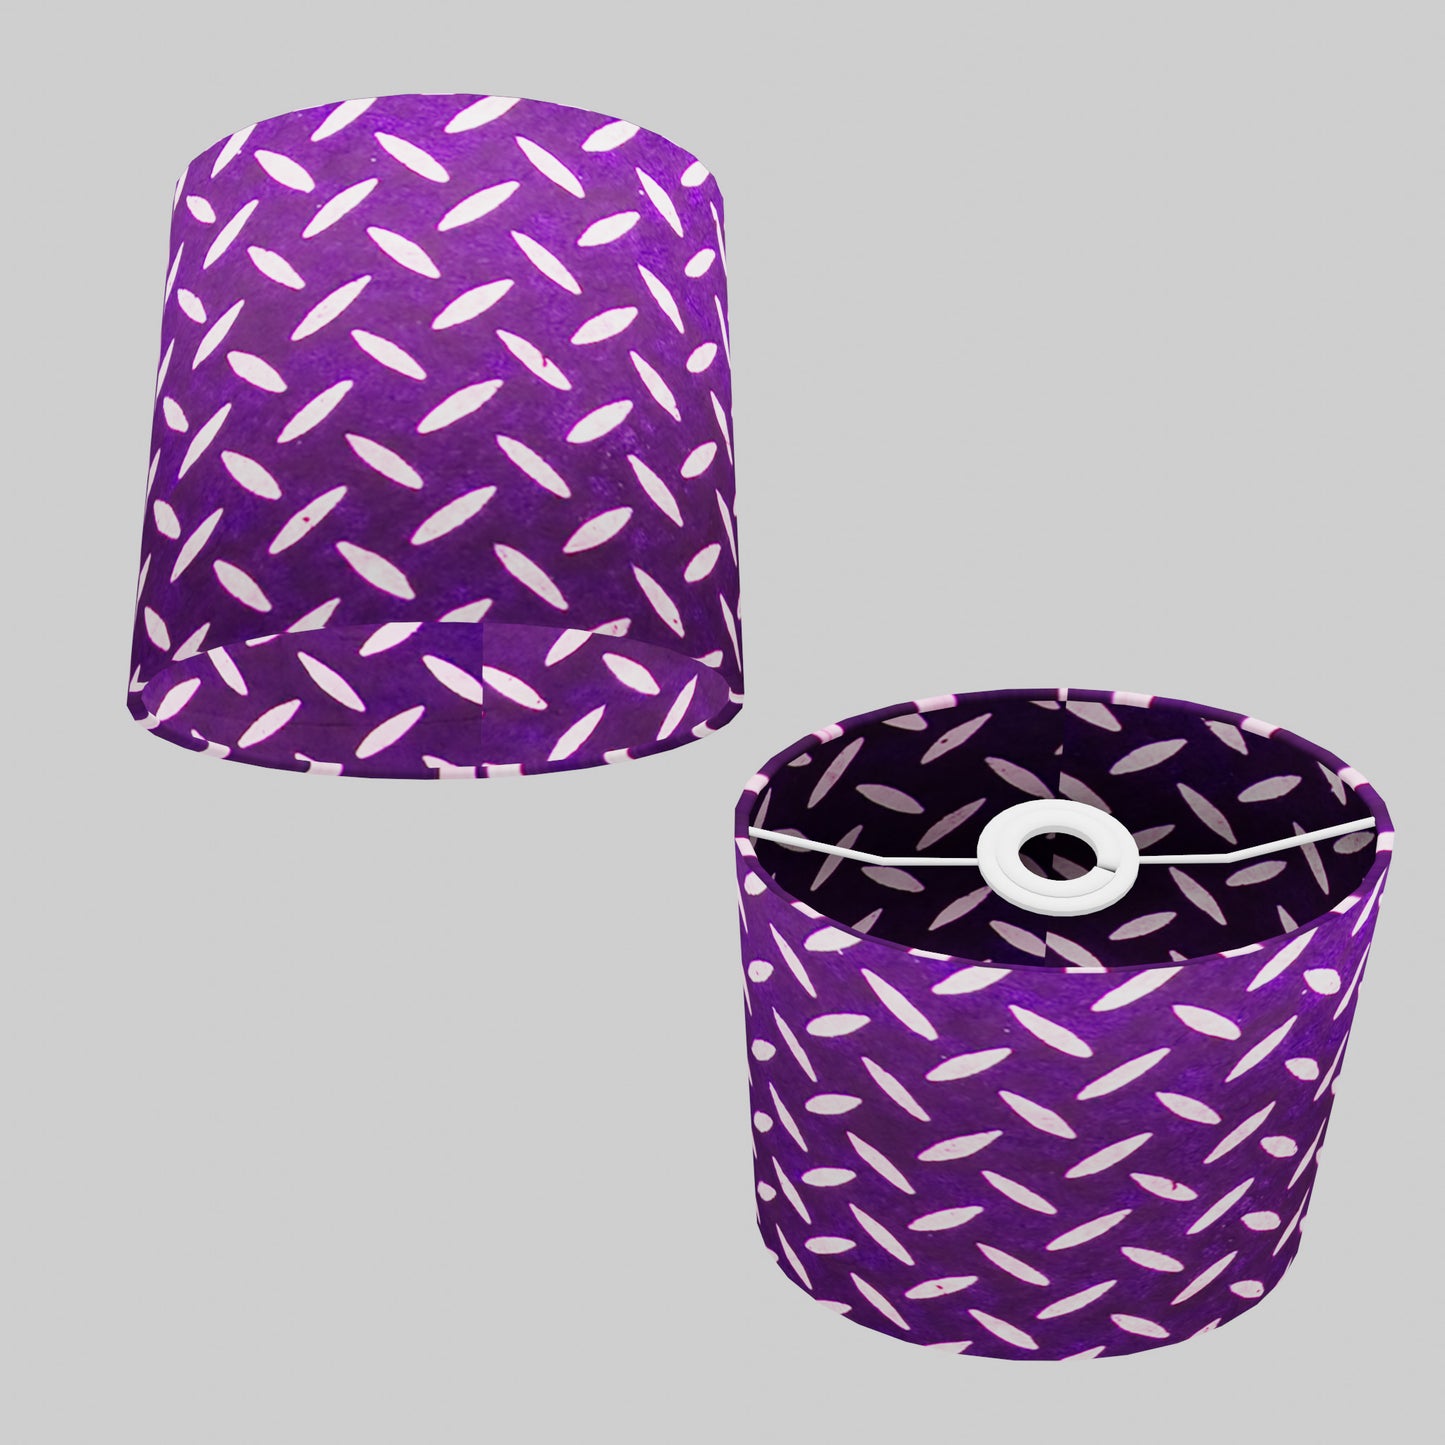 Oval Lamp Shade - P13 - Batik Tread Plate Purple, 20cm(w) x 20cm(h) x 13cm(d)